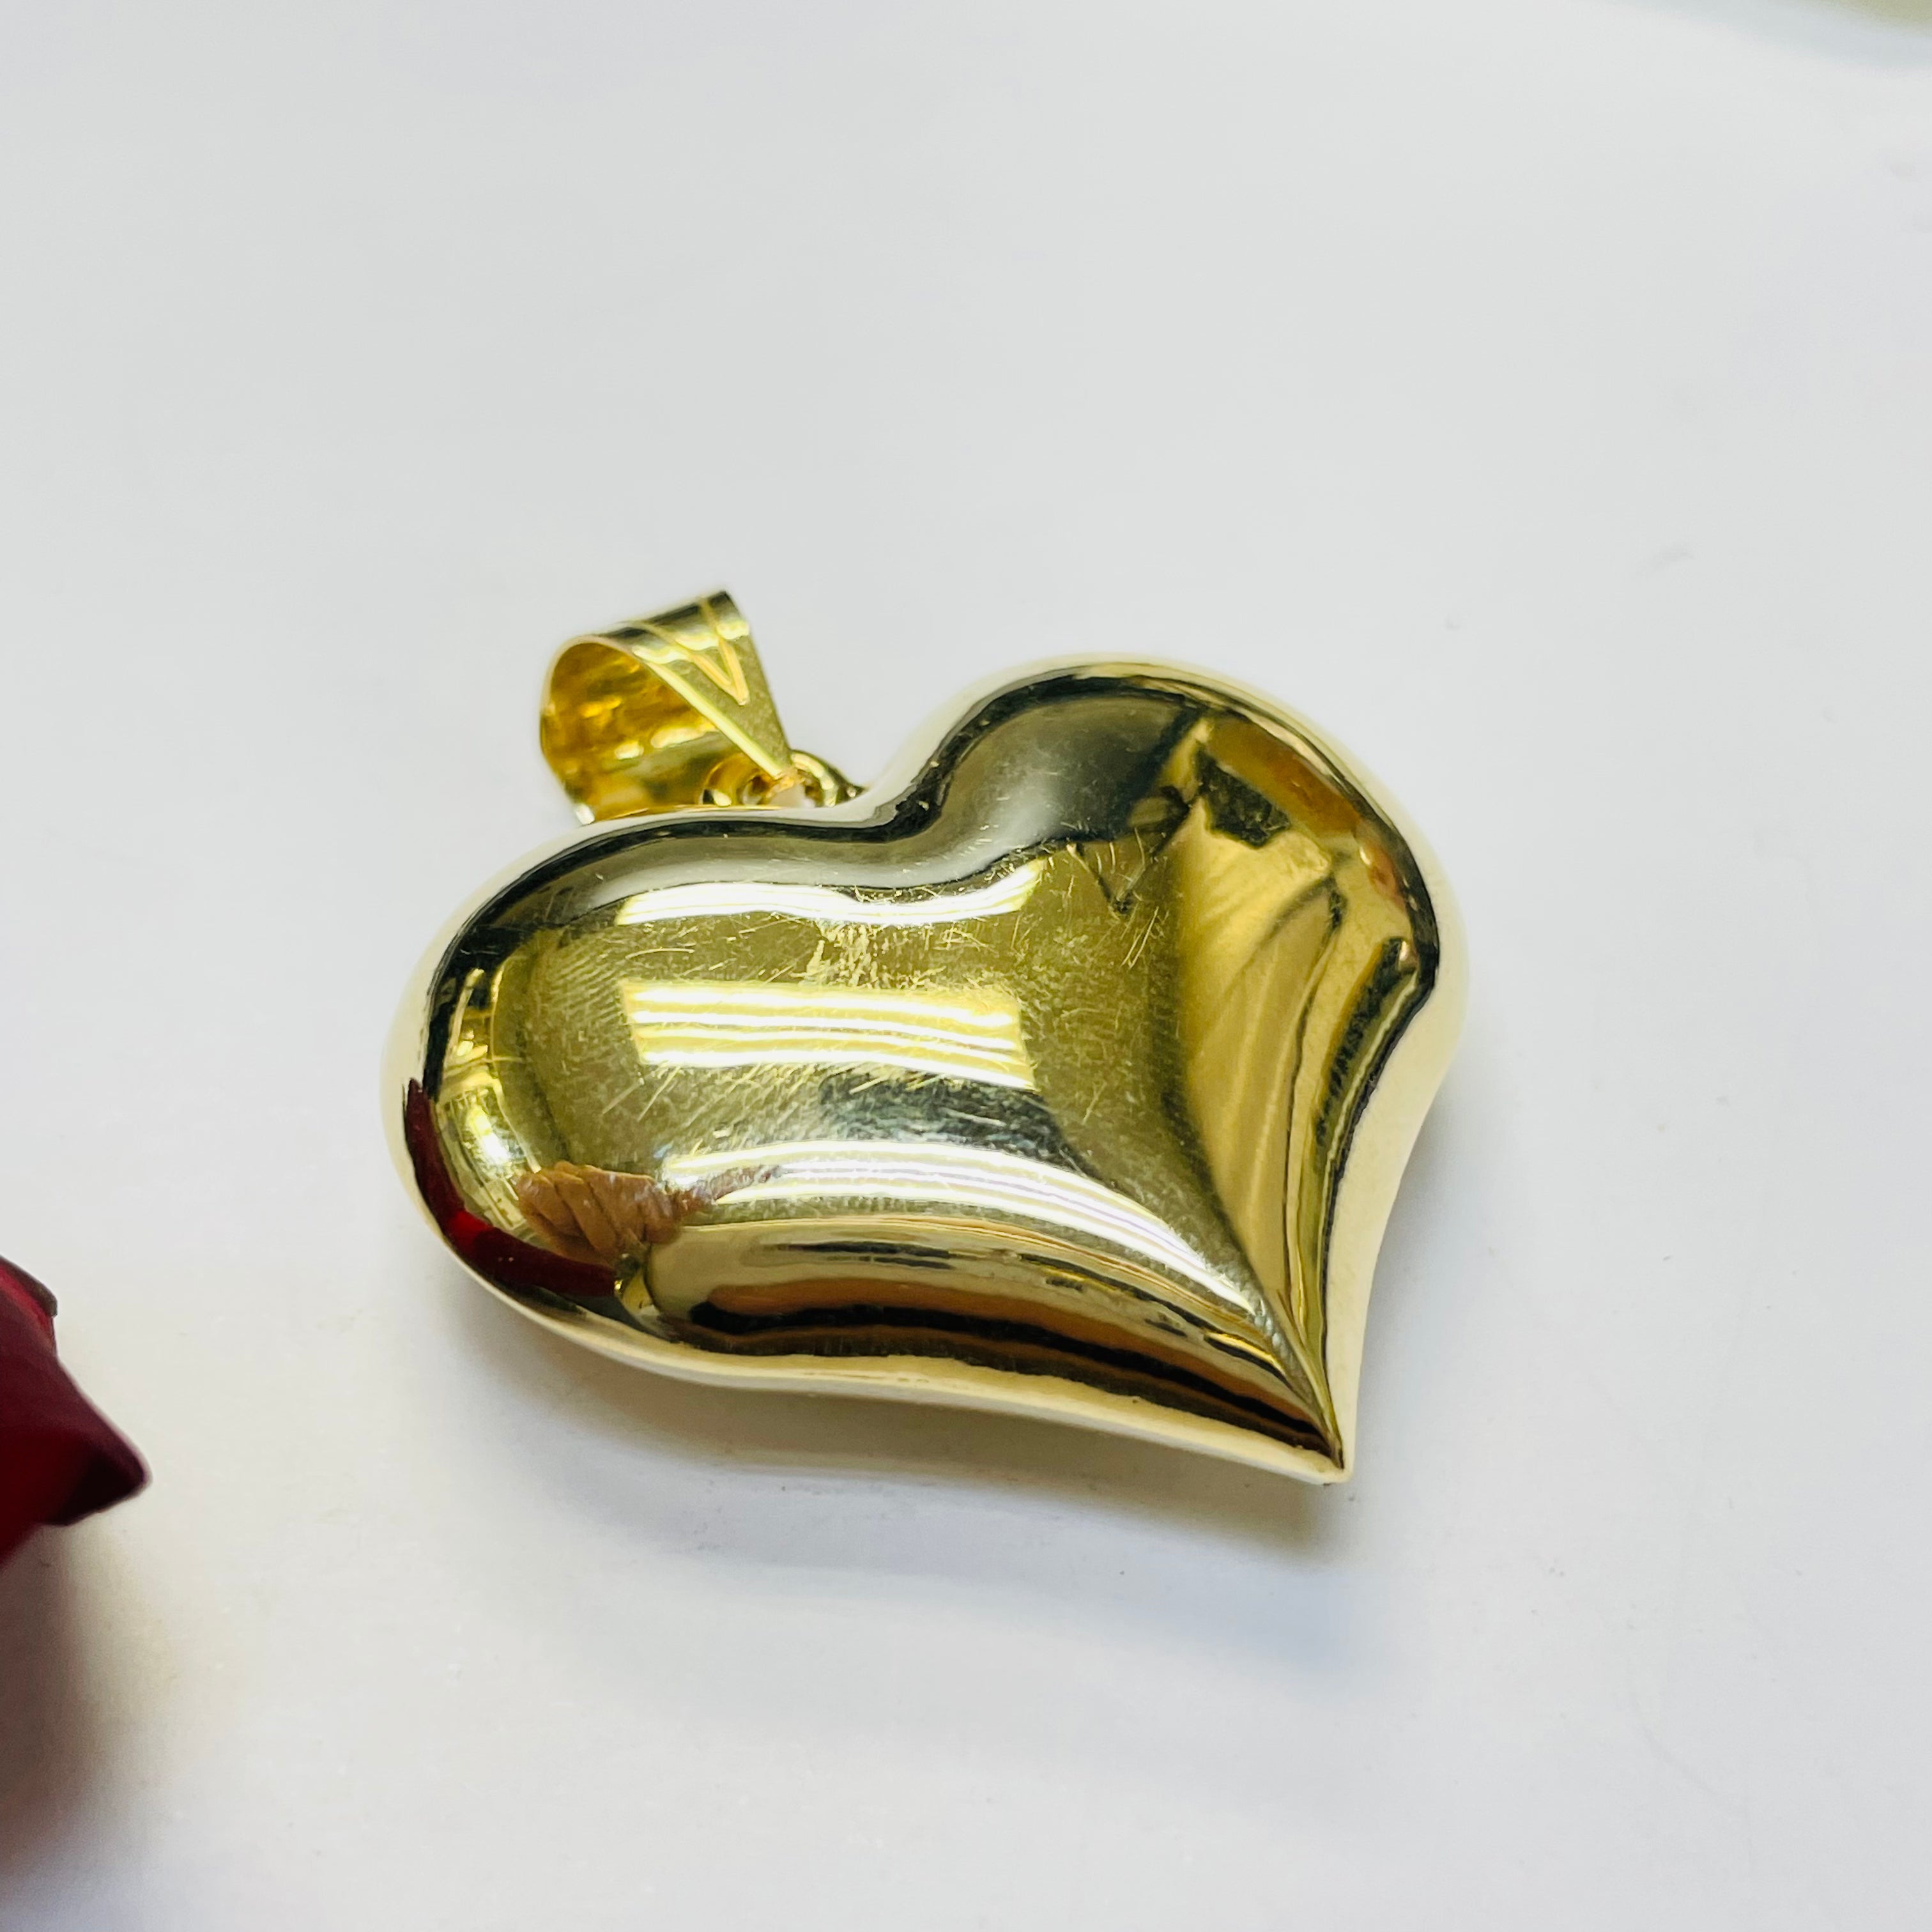 14K Yellow Gold Puffed Heart Pendant Charm 1.75”